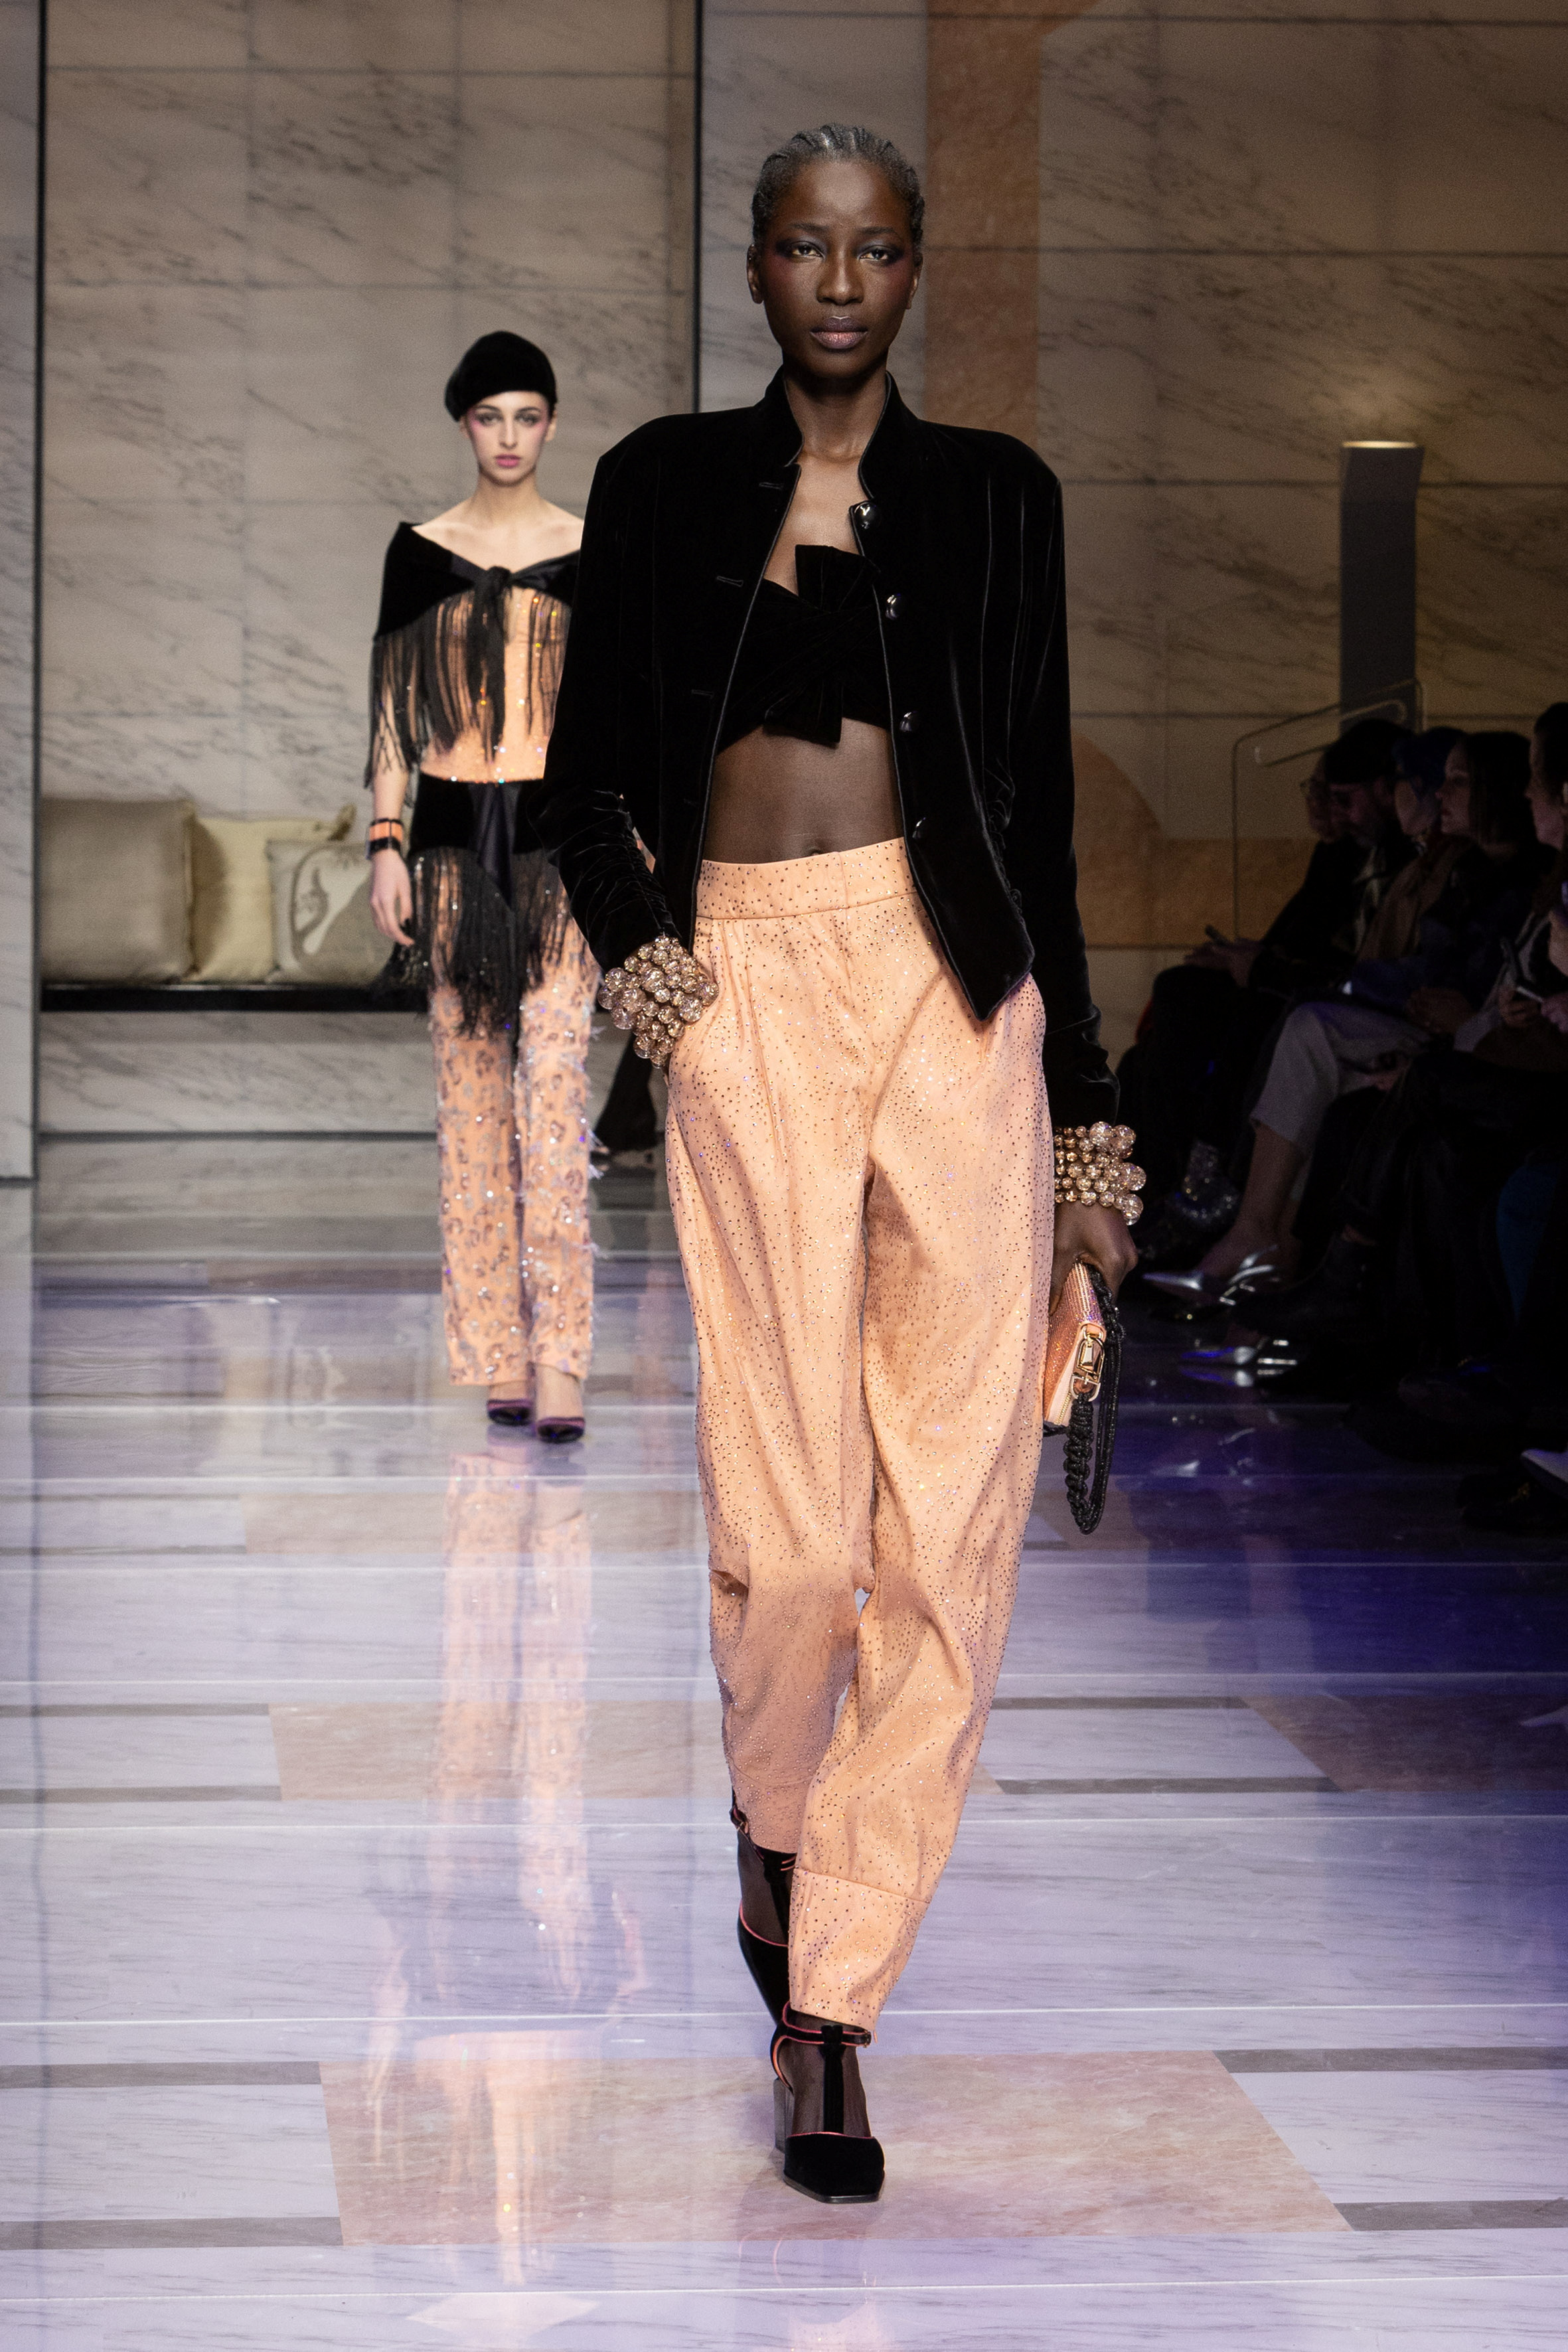 Psychologisch Makkelijk in de omgang Cater Giorgio Armani offers soft, fluid winter designs at Milan Fashion Week |  Reuters